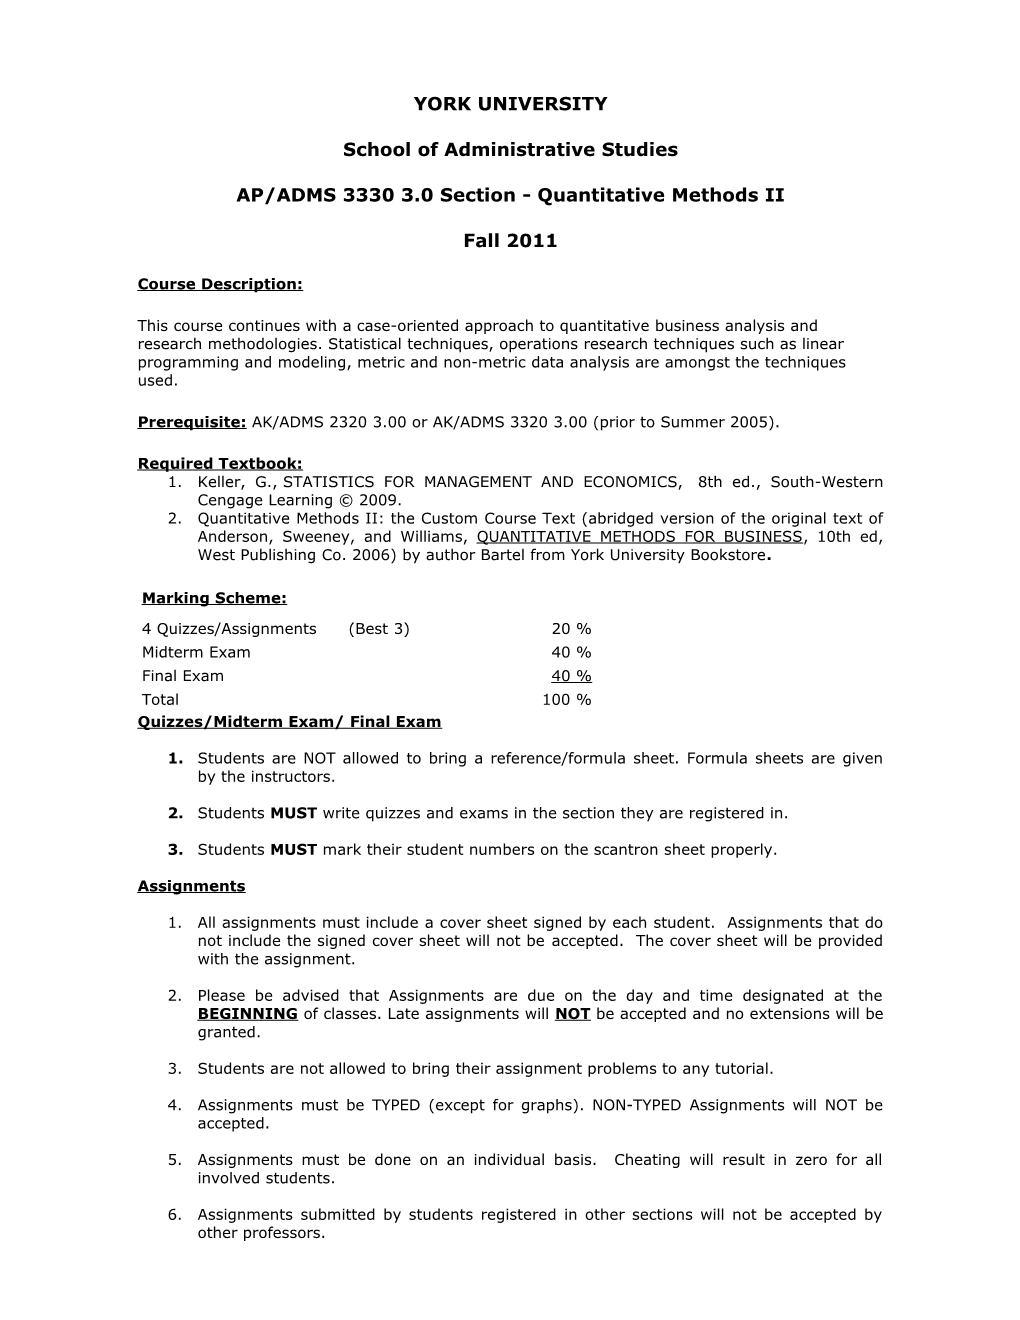 AP/ADMS 3330 3.0 Section- Quantitative Methods II